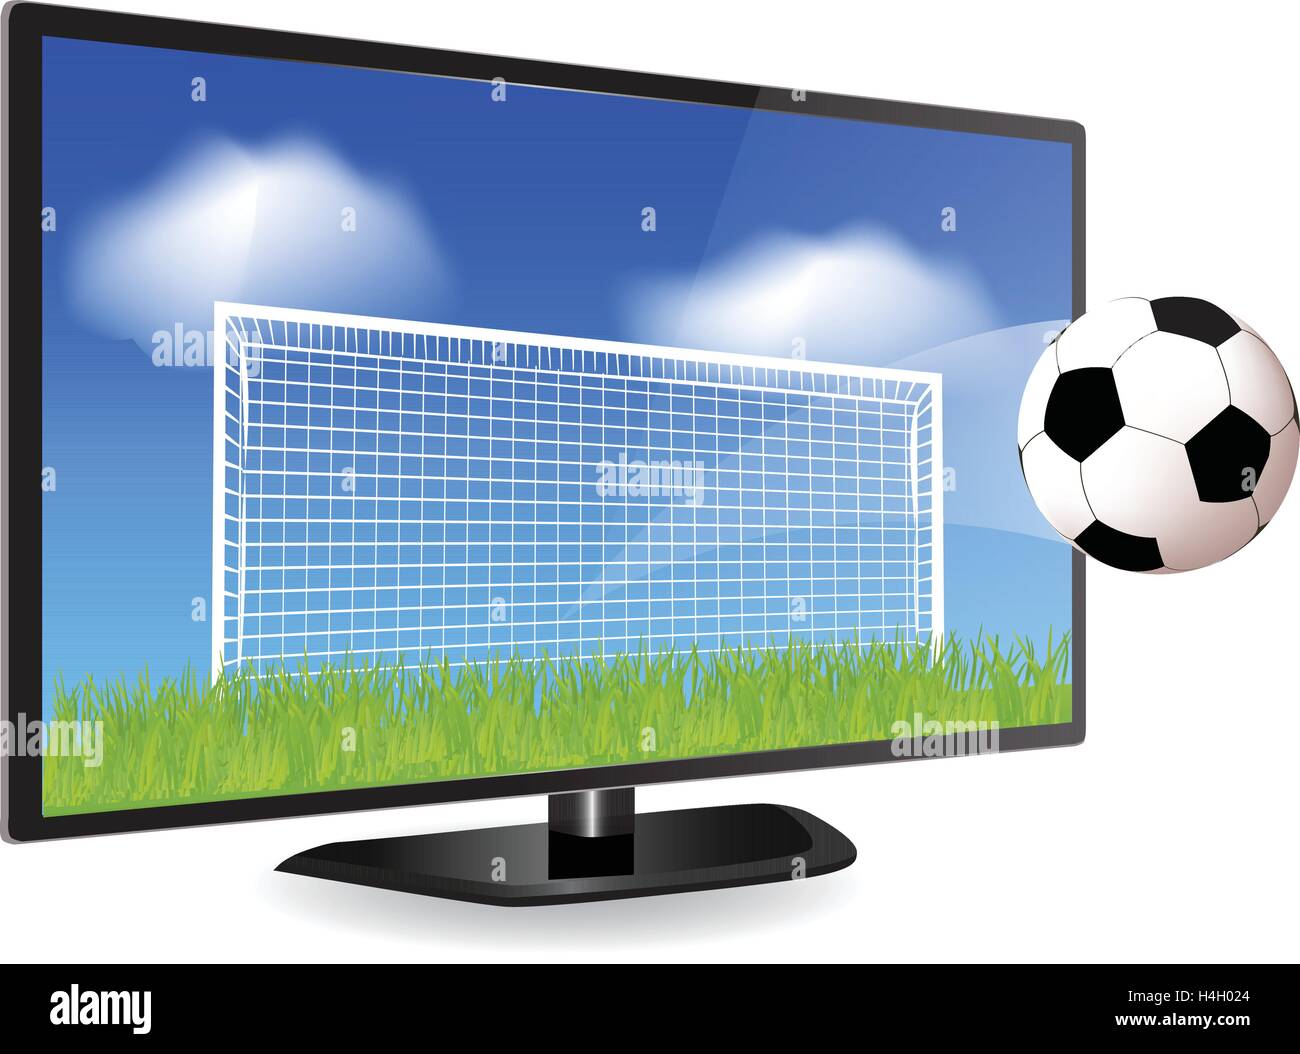 Soccer ball in motion flying off Smart Tv screen Stock Vector